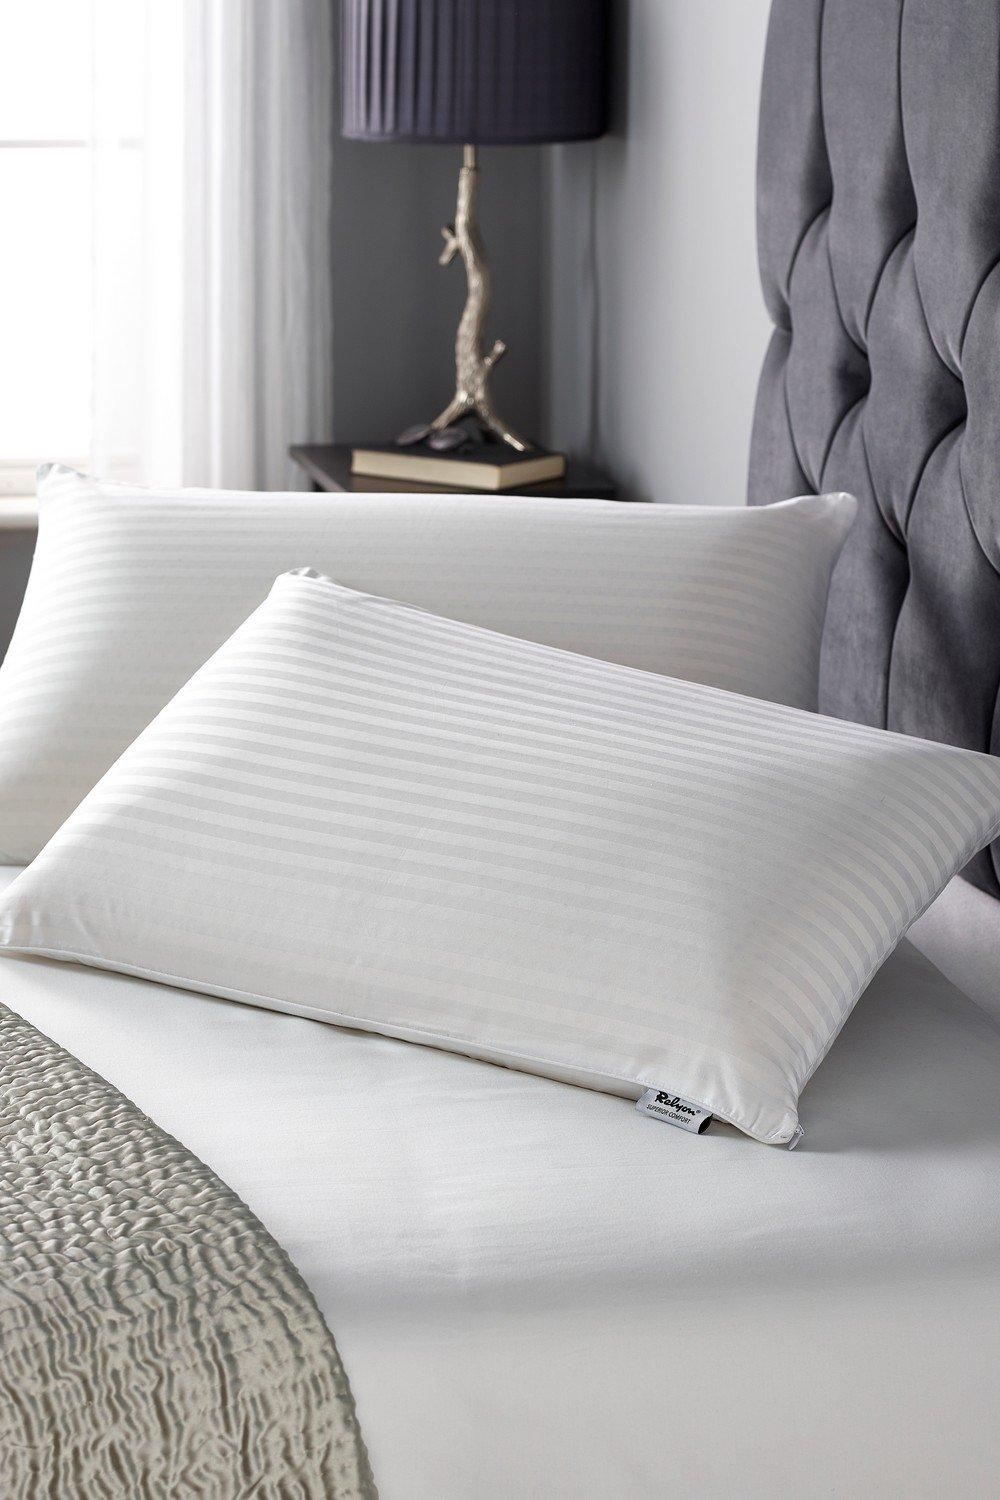 100% Natural Latex Superior Comfort Deep Latex Pillow